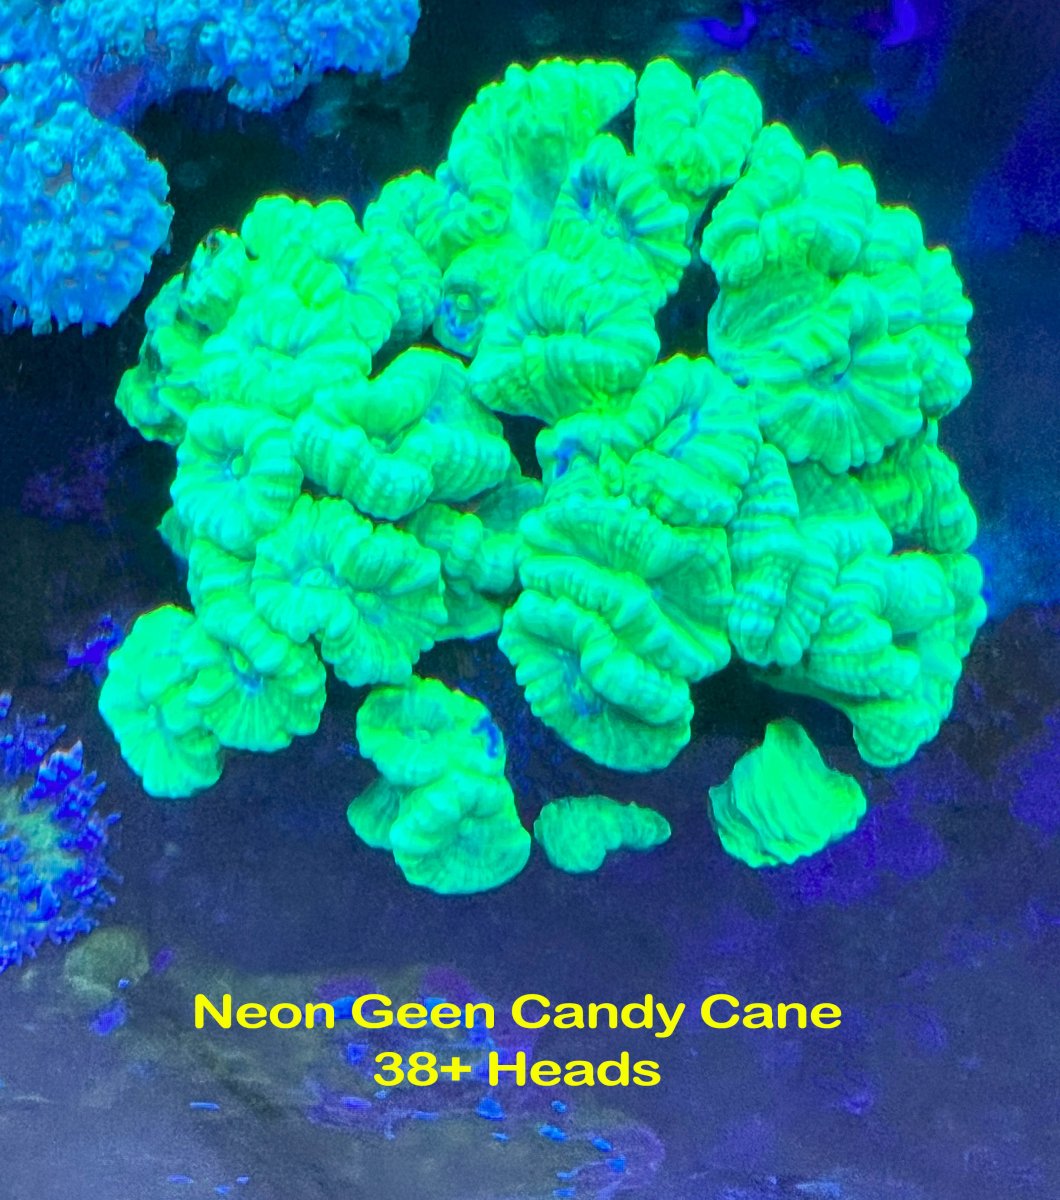 Neon Geen Candy Cane.jpg